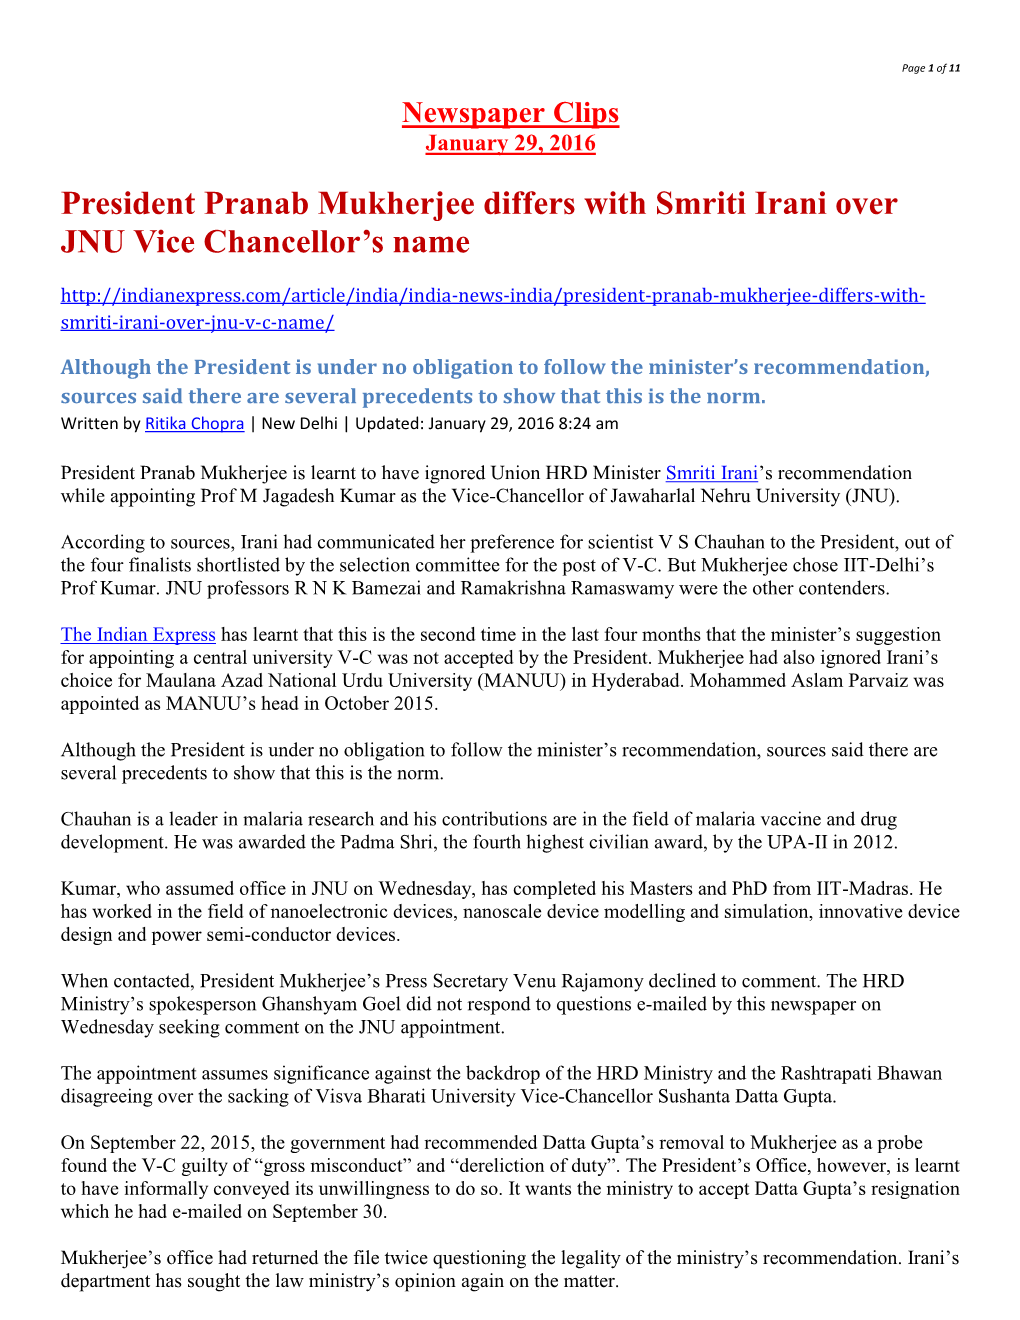 President Pranab Mukherjee Differs With